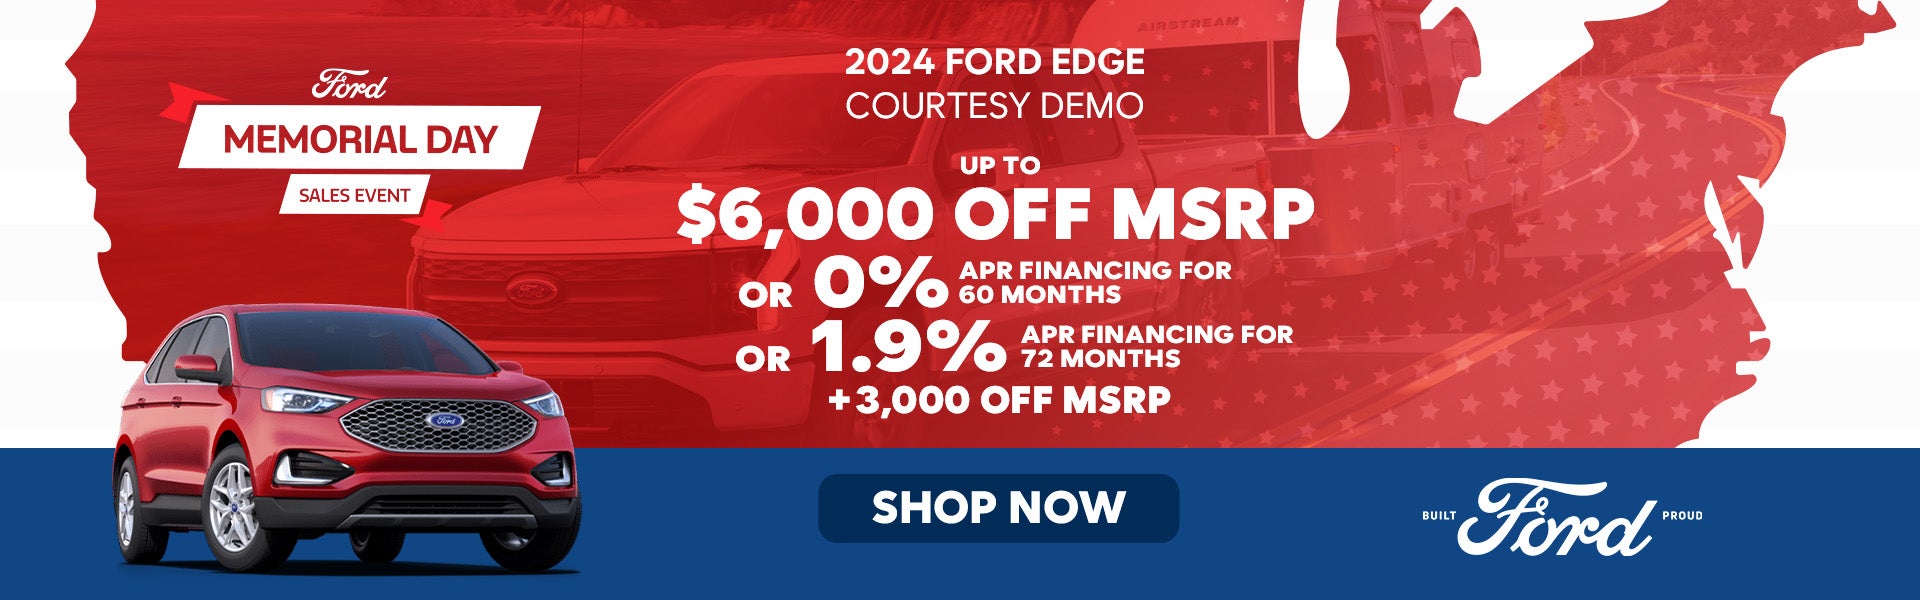 2024 Ford Edge Courtesy Demo